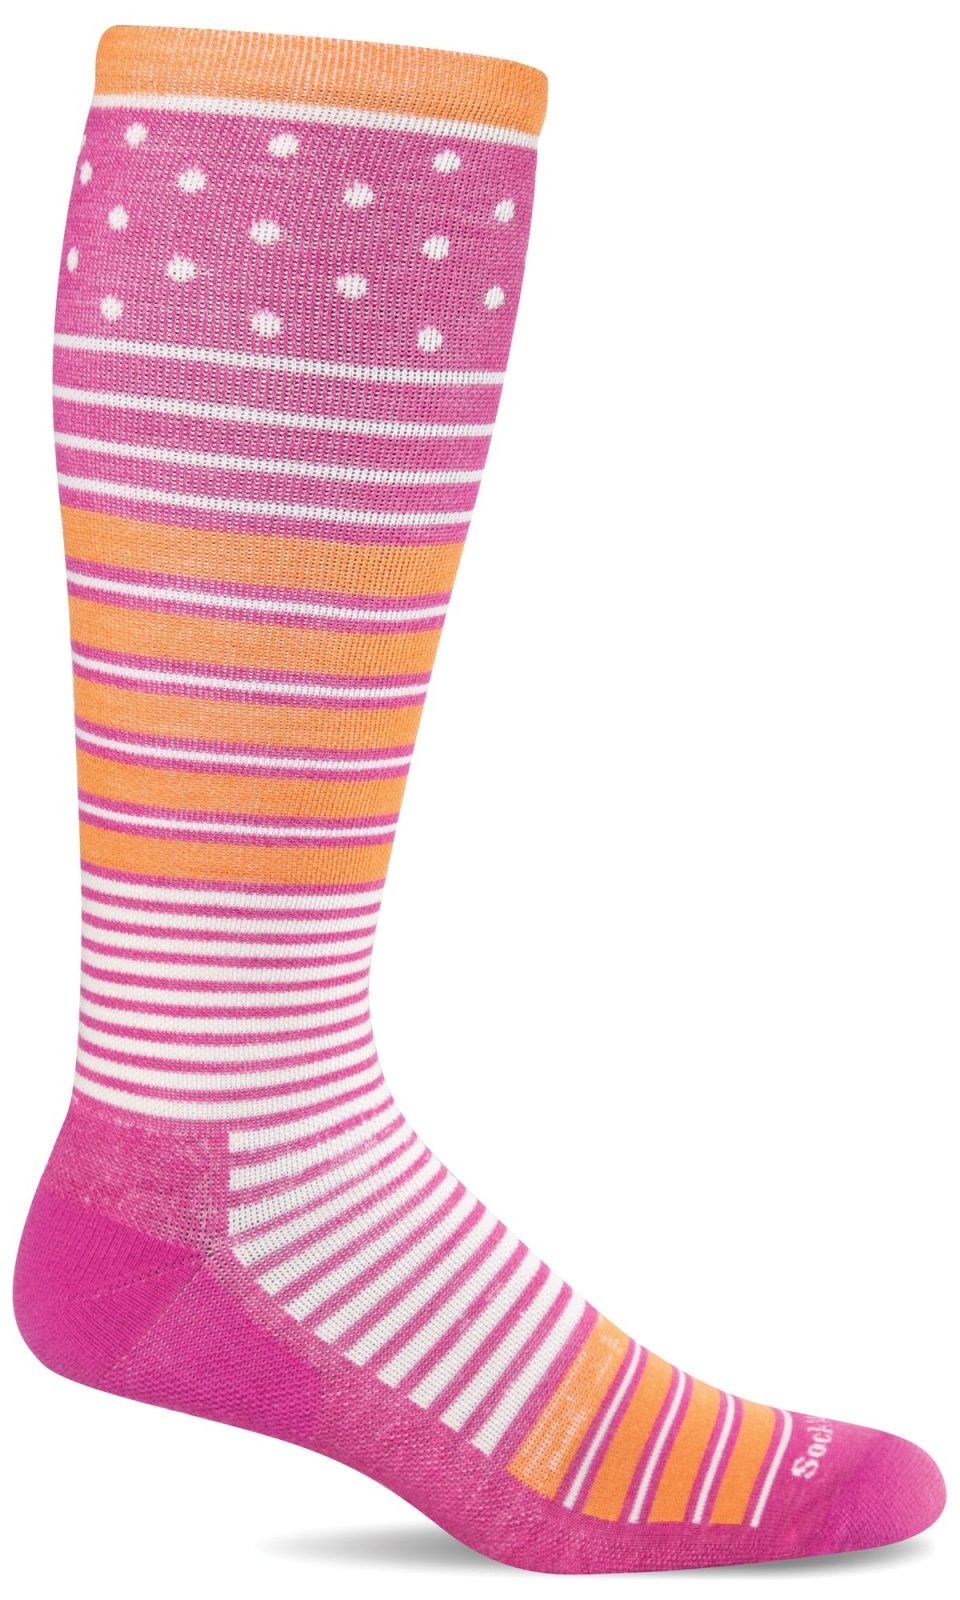 Women's Twister | Firm Graduated Compression Socks - Merino Wool Lifestyle Compression - Sockwell